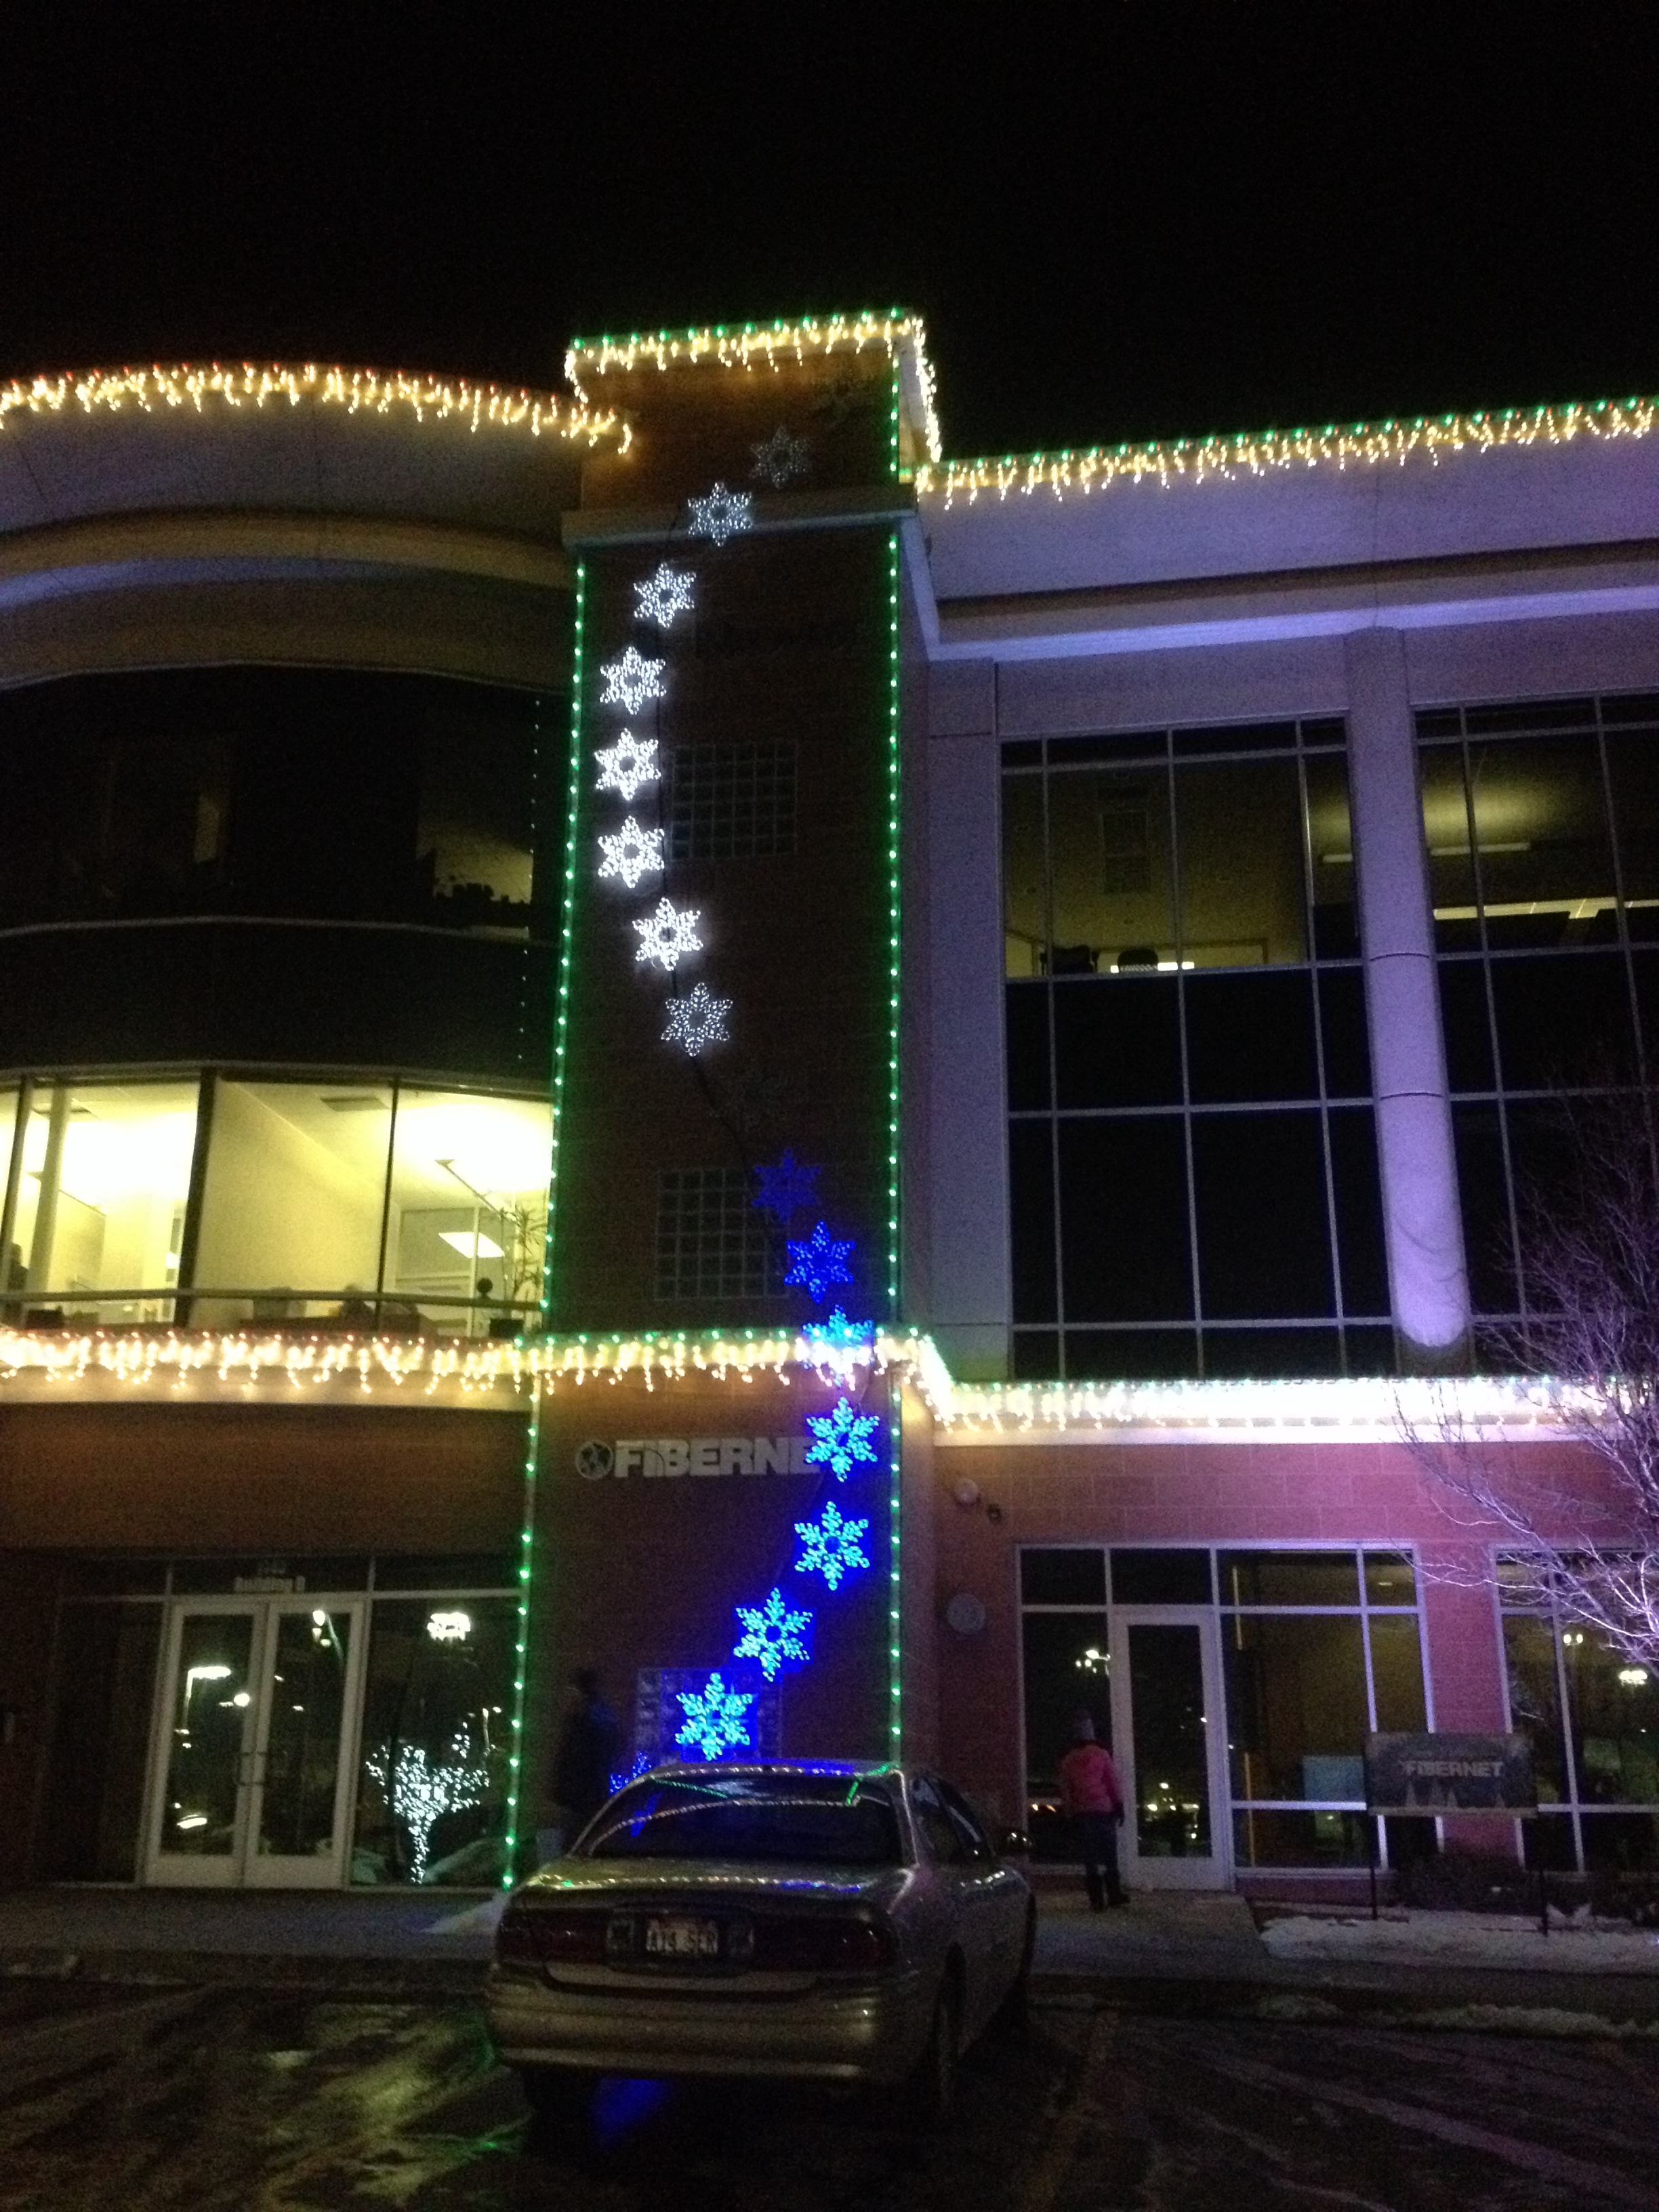 Fibernet Corp's holiday lights in Orem